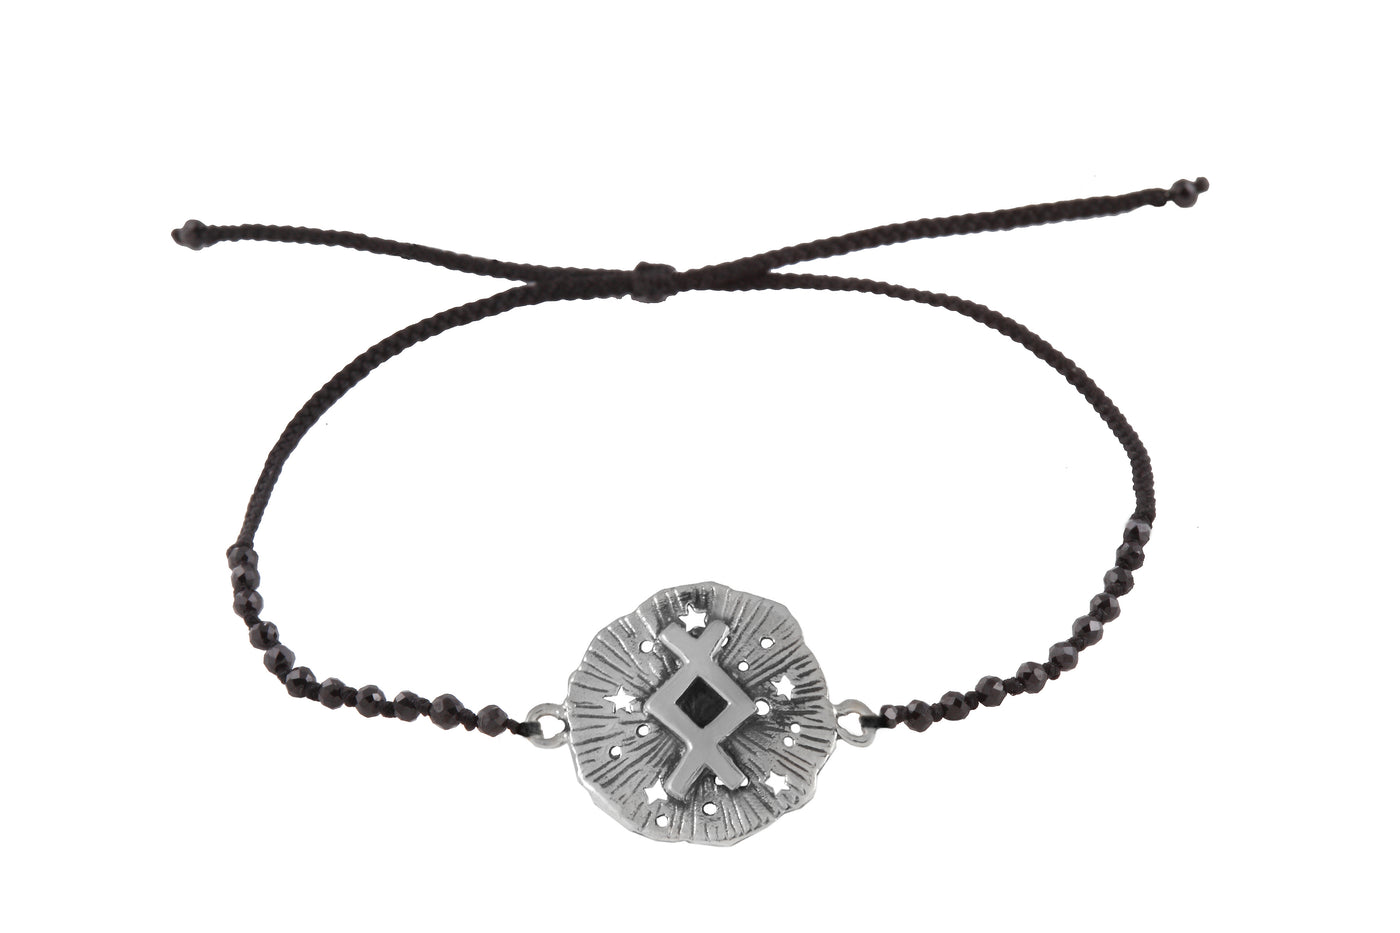 Inguz medallion bracelet with semiprecious stone beads. Silver